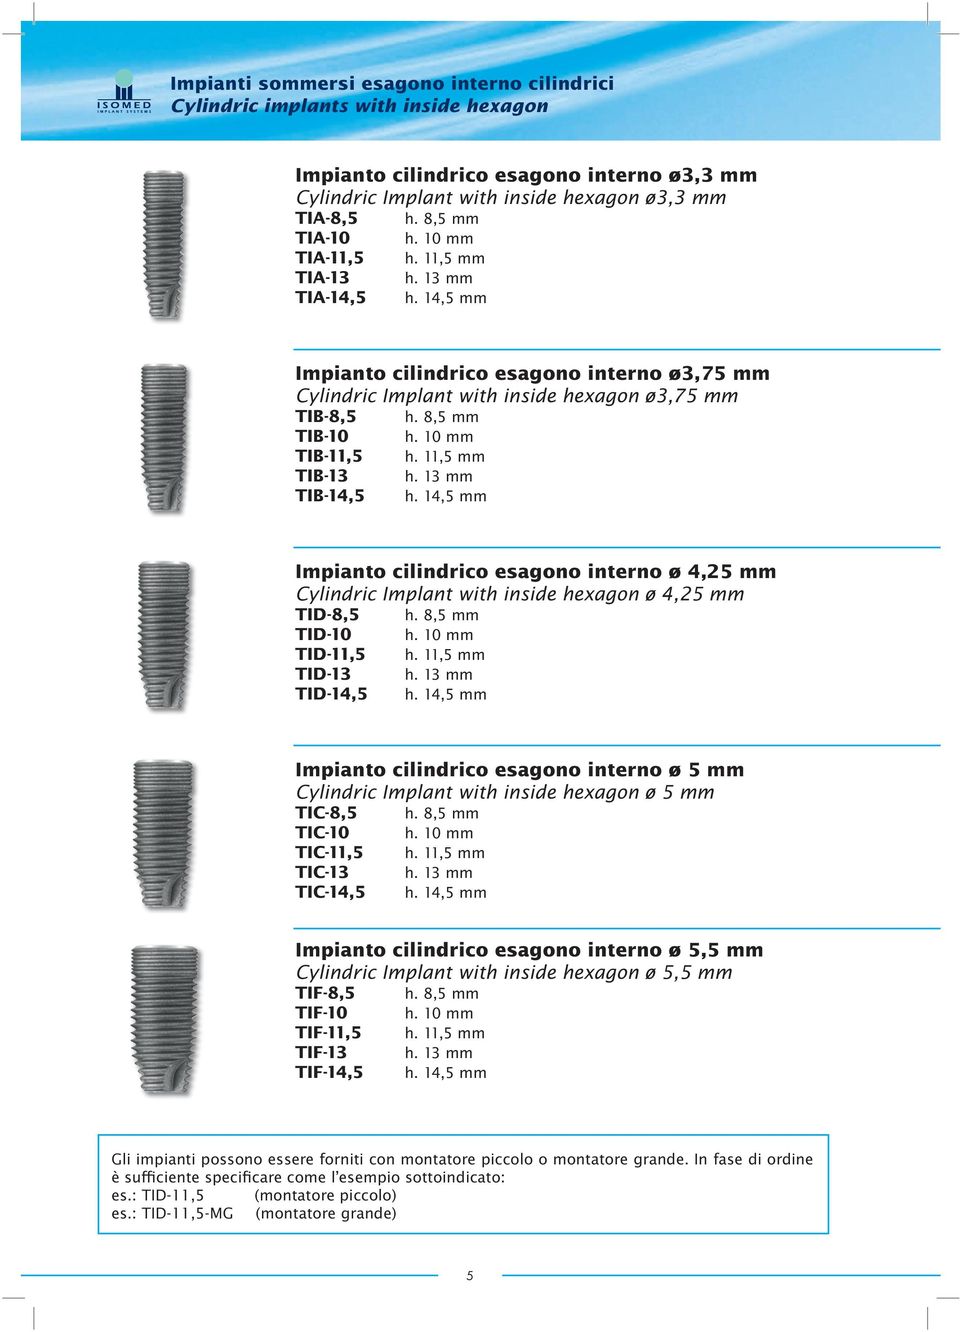 10 mm TIB-11,5 h. 11,5 mm TIB-13 h. 13 mm TIB-14,5 h. 14,5 mm Impianto cilindrico esagono interno ø 4,25 mm Cylindric Implant with inside hexagon ø 4,25 mm TID-8,5 h. 8,5 mm TID-10 h.